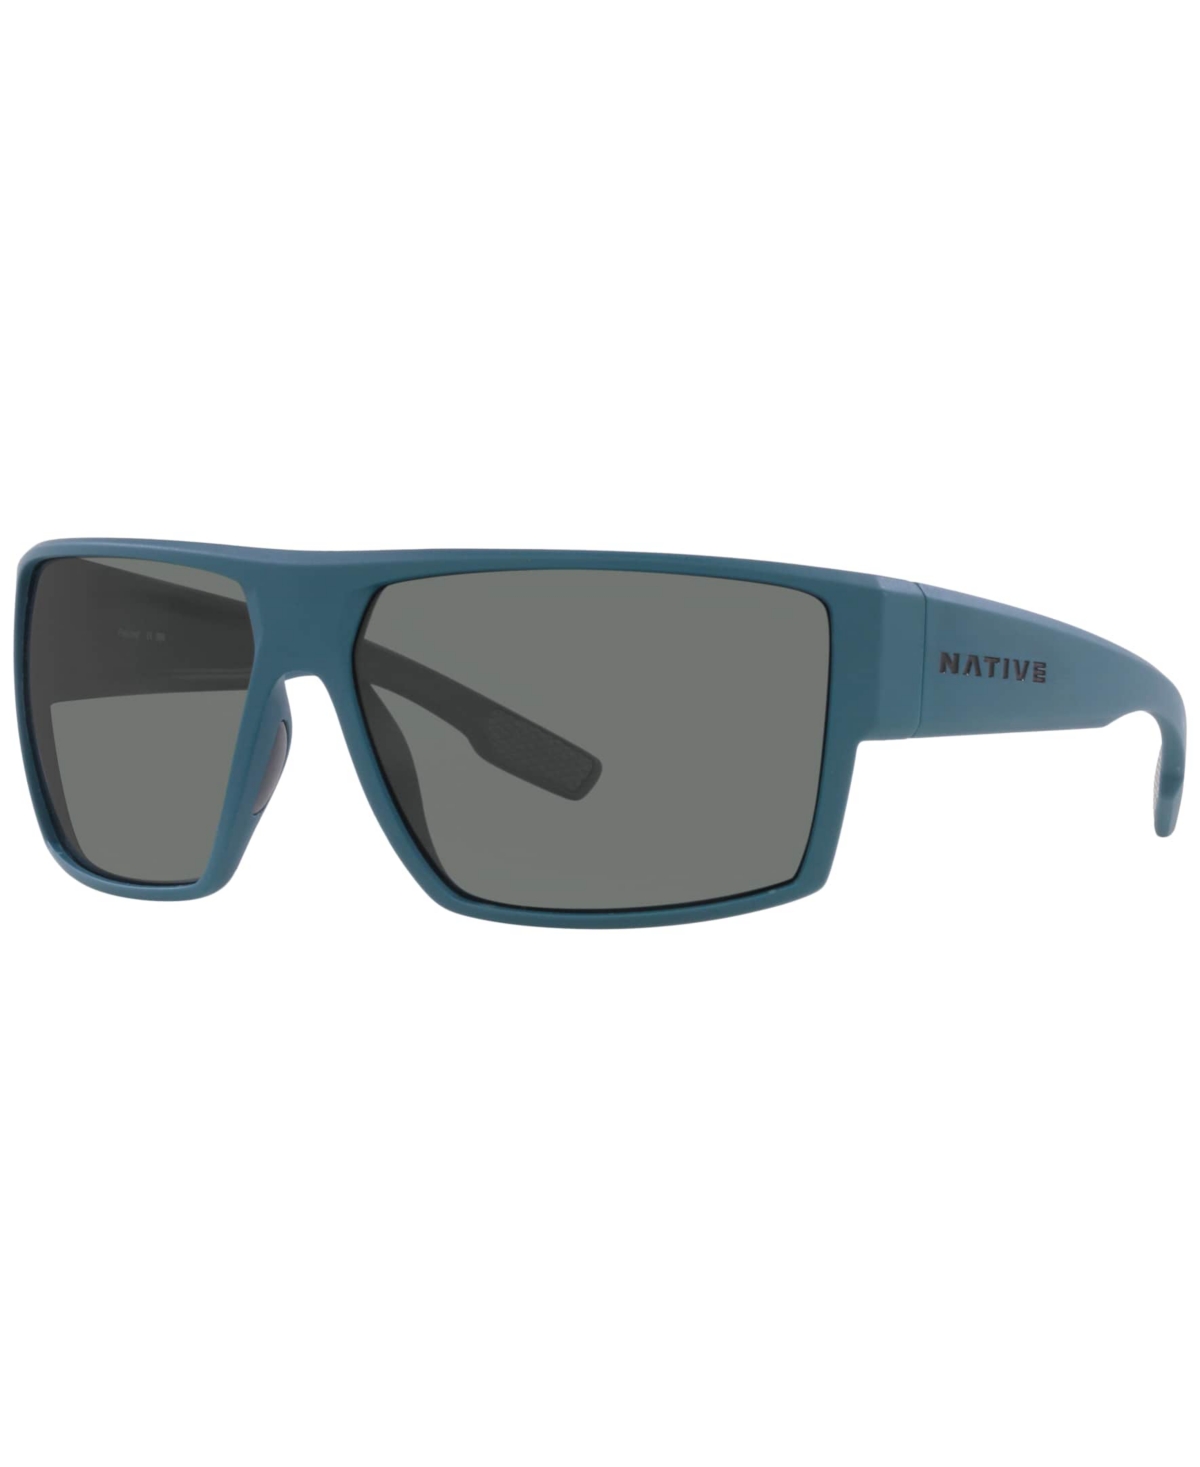 Native Men's Polarized Sunglasses, XD9013 - BLUE AGAVE/GREY